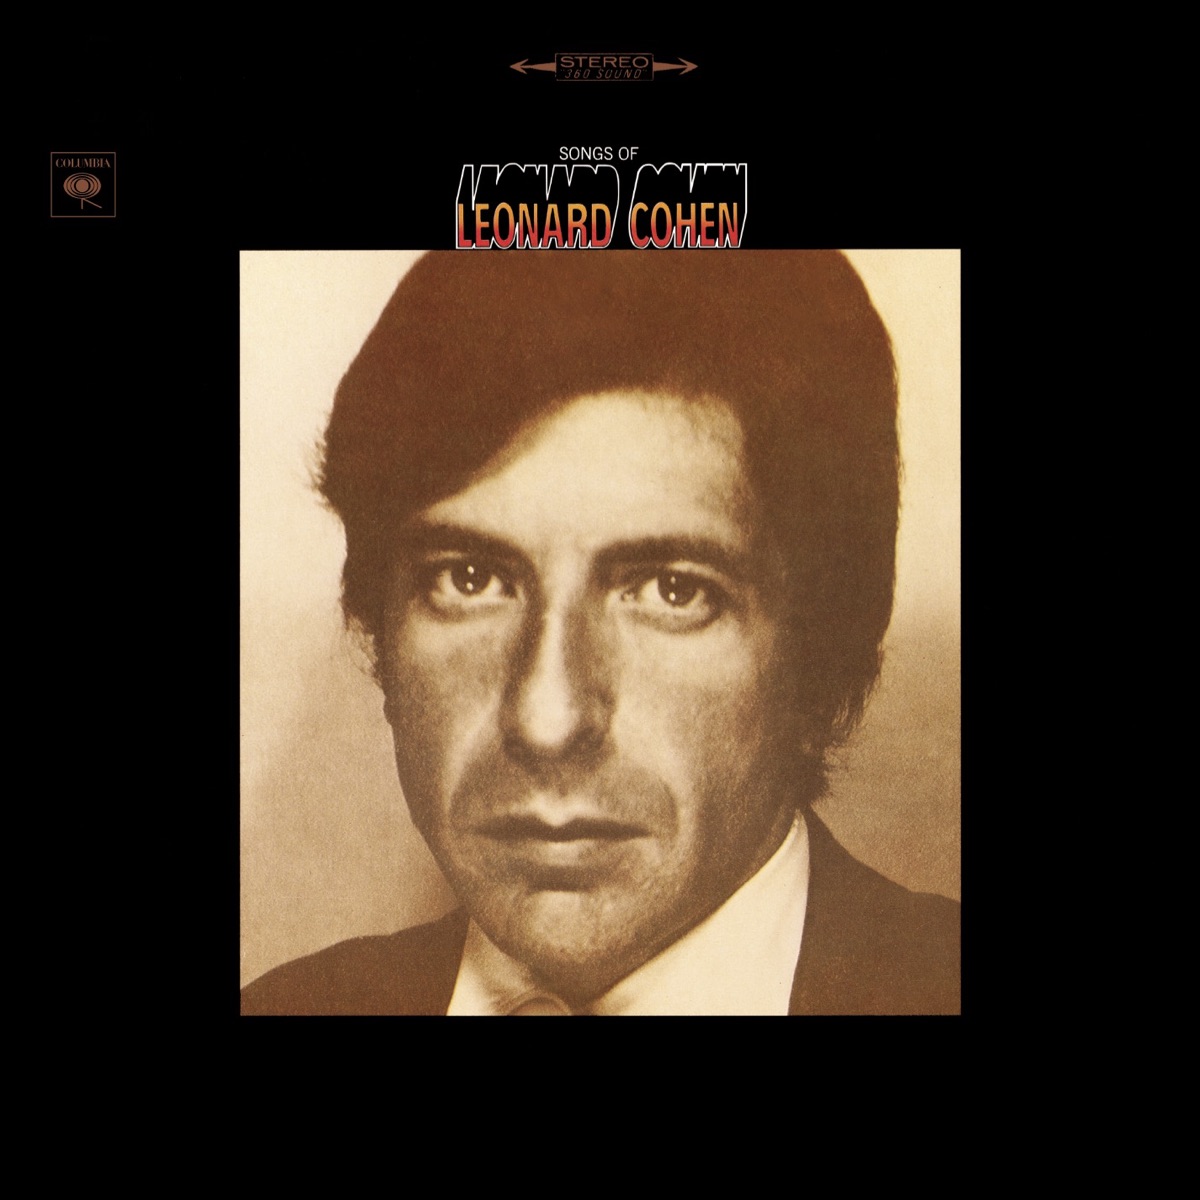 Leonard Cohen by Leonard Cohen